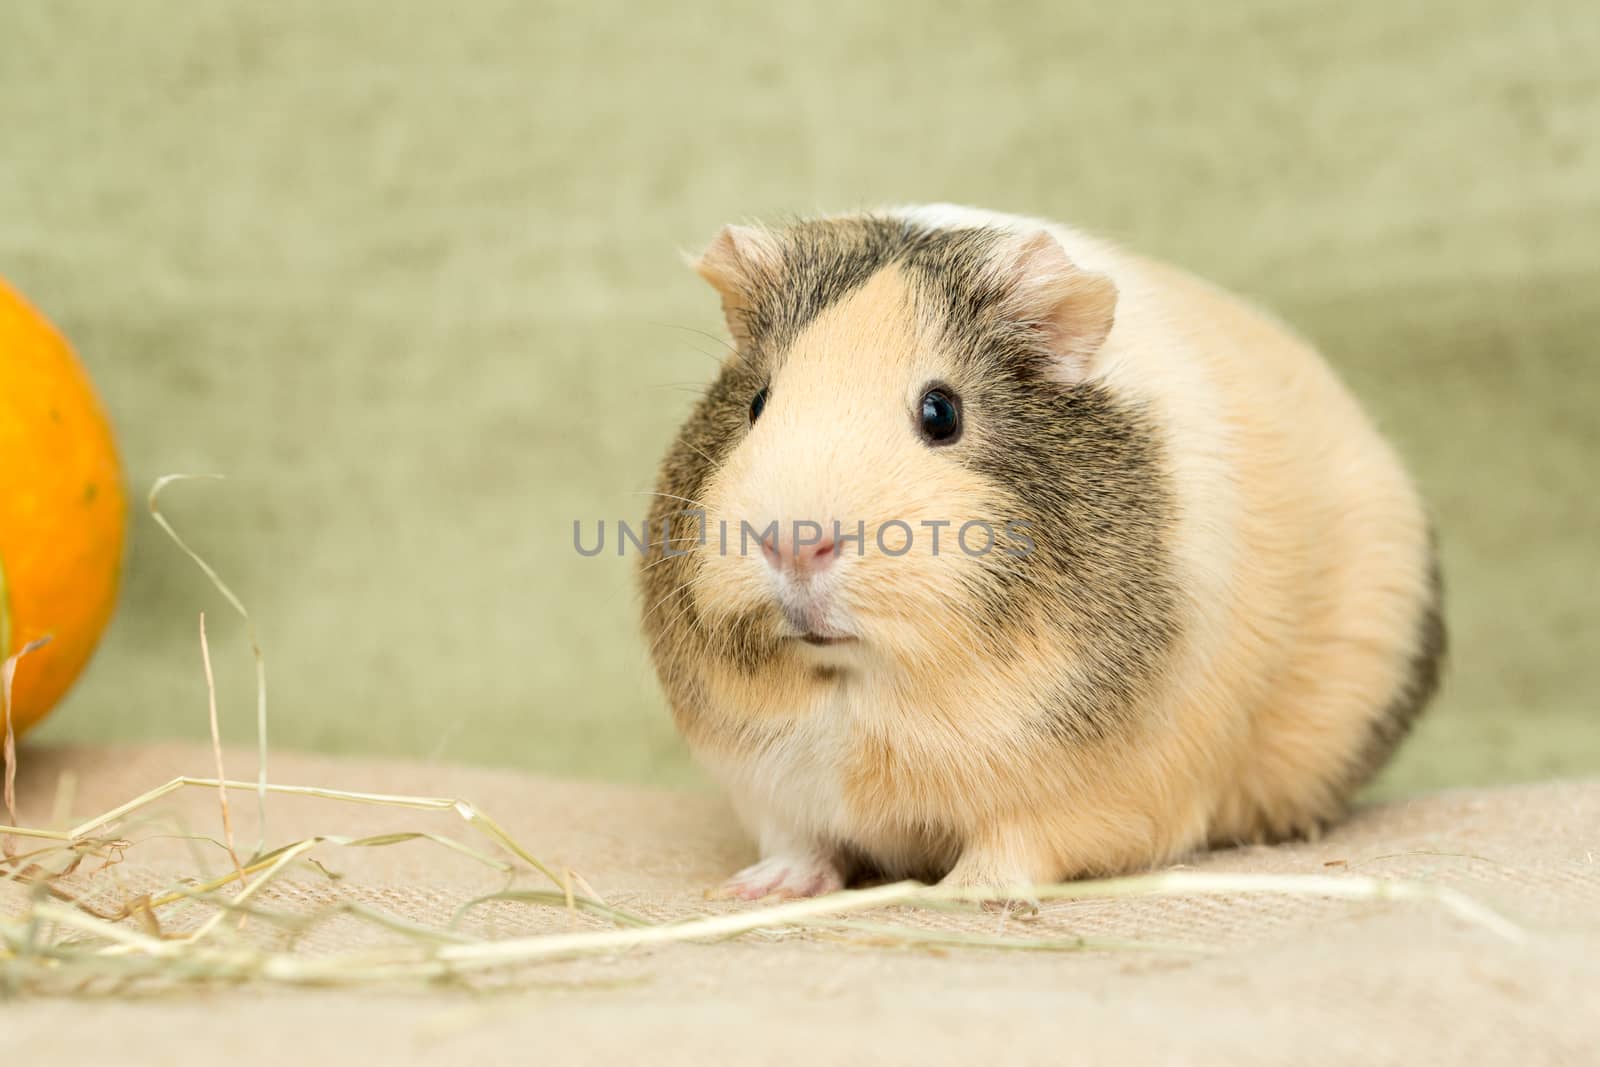 Guinea pig closeup by olgagordeeva